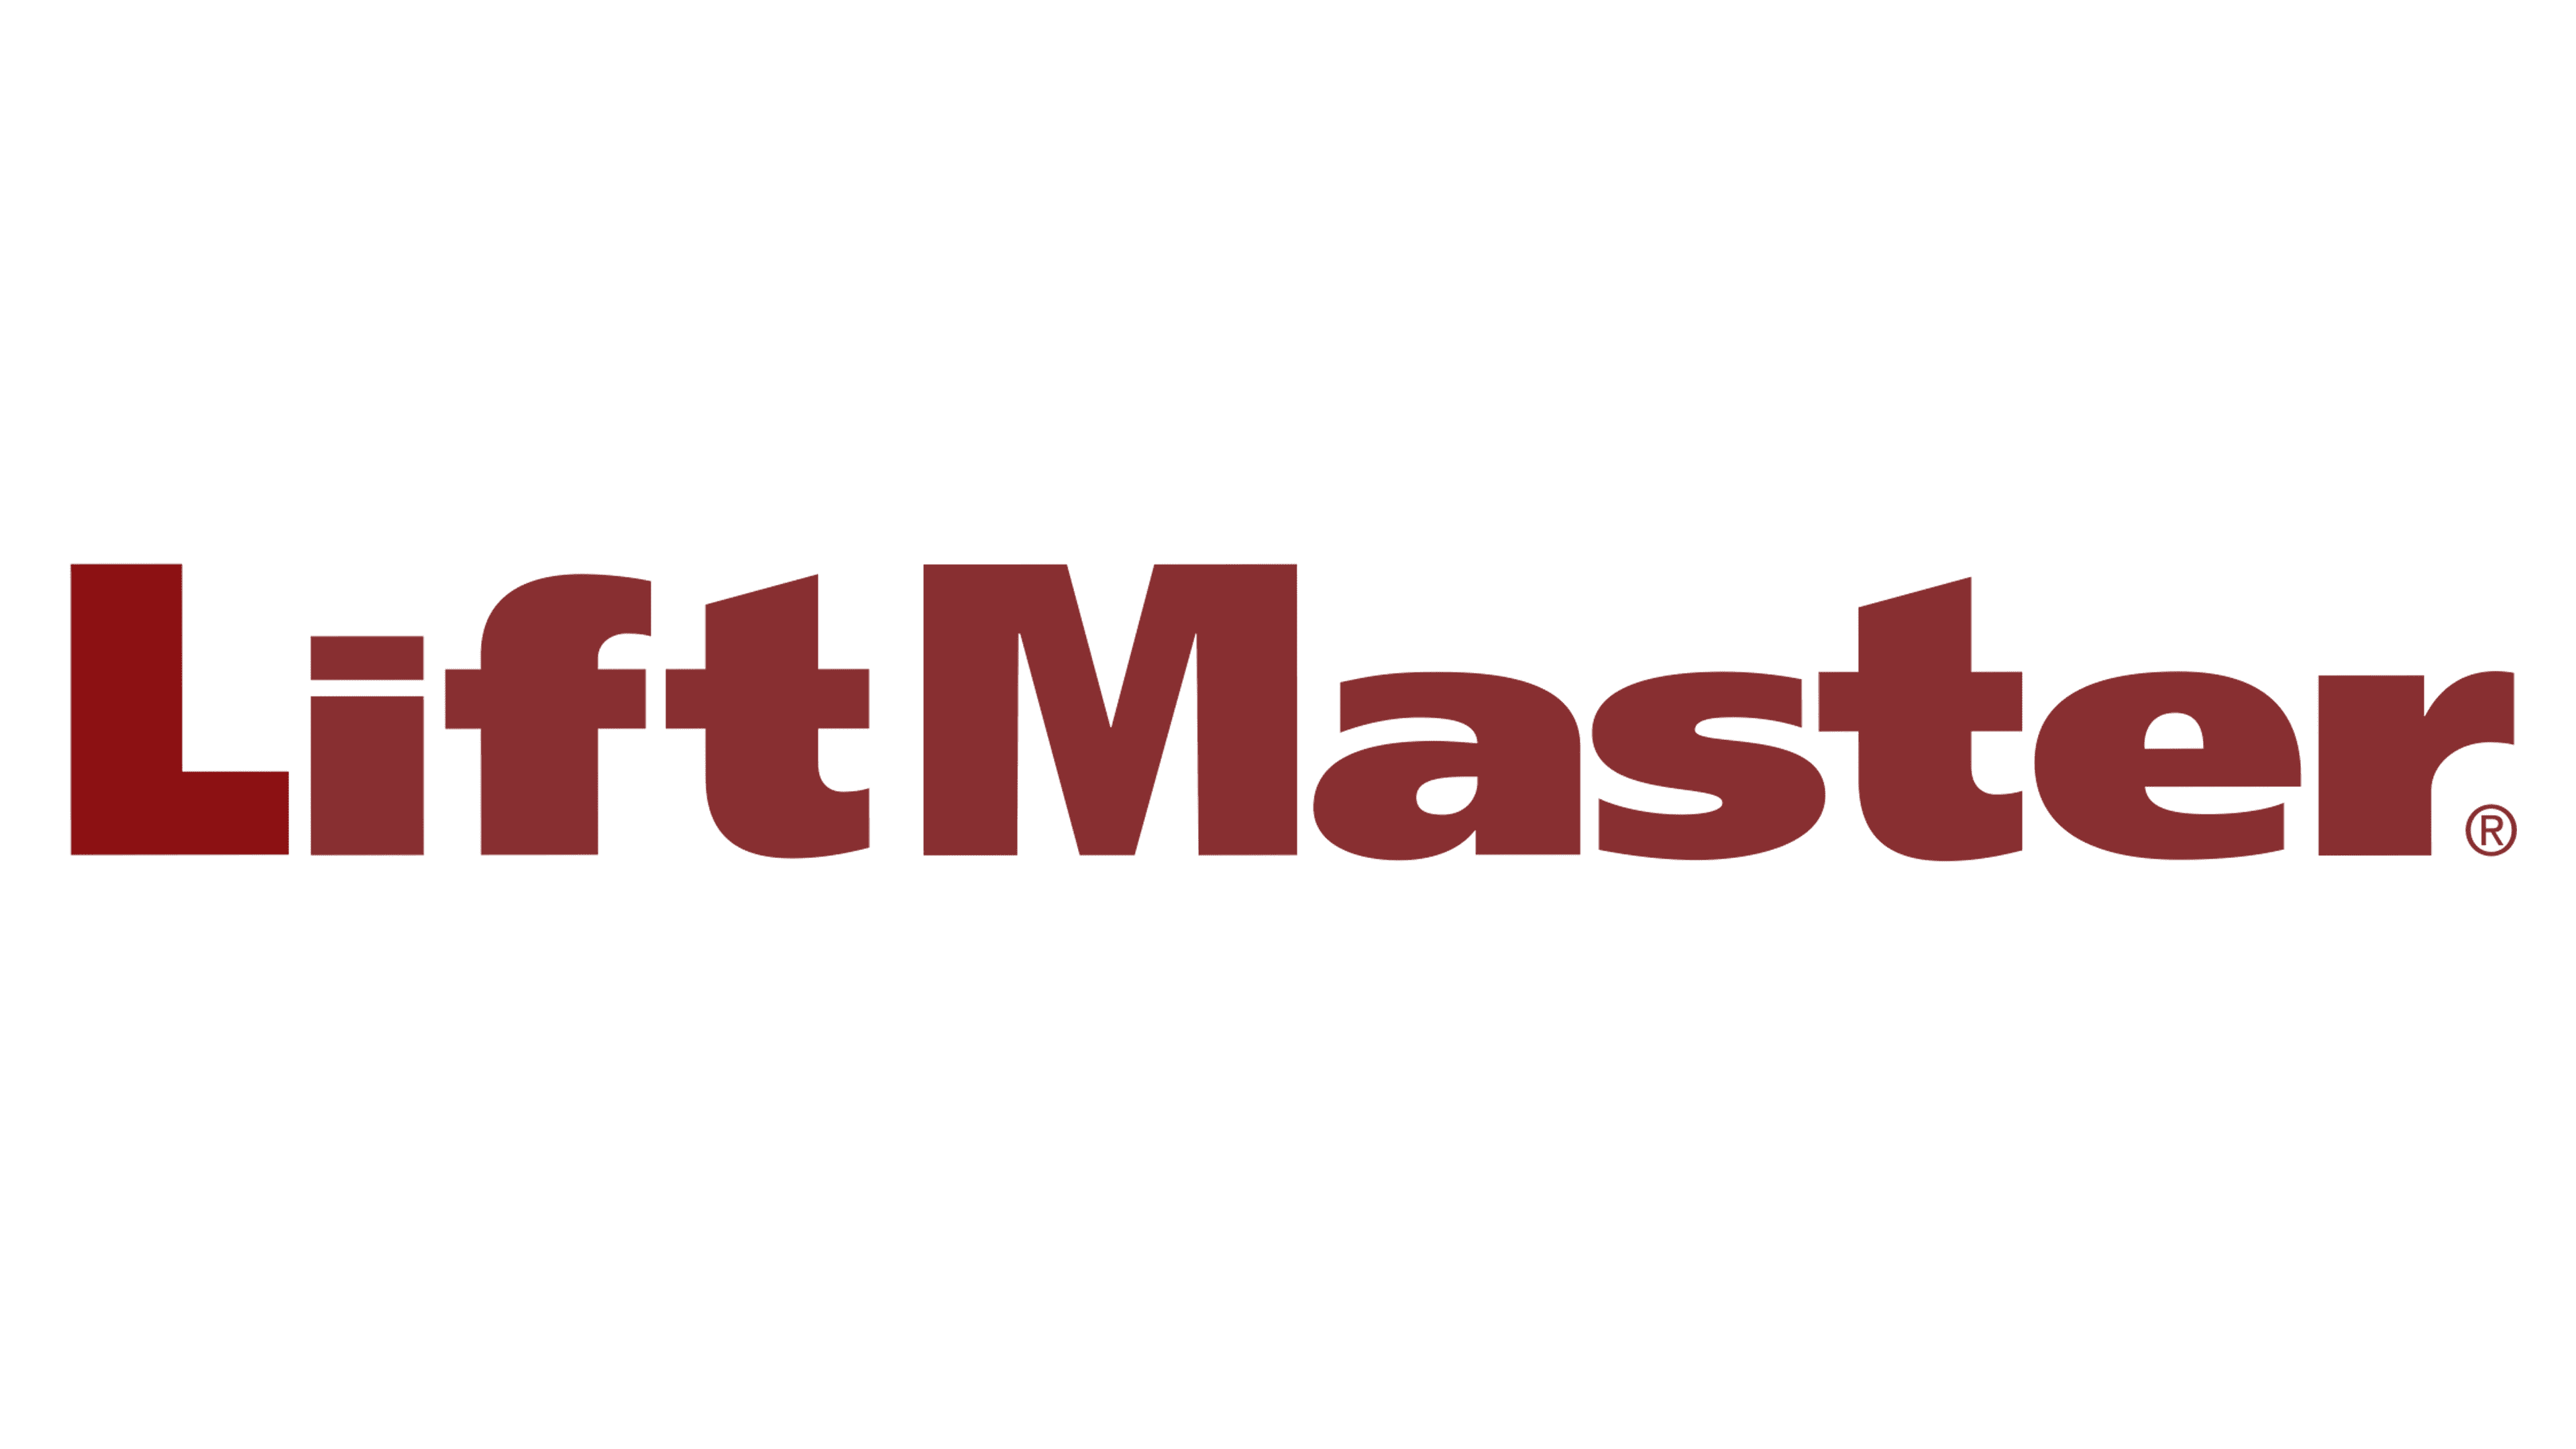 Liftmaster-logo